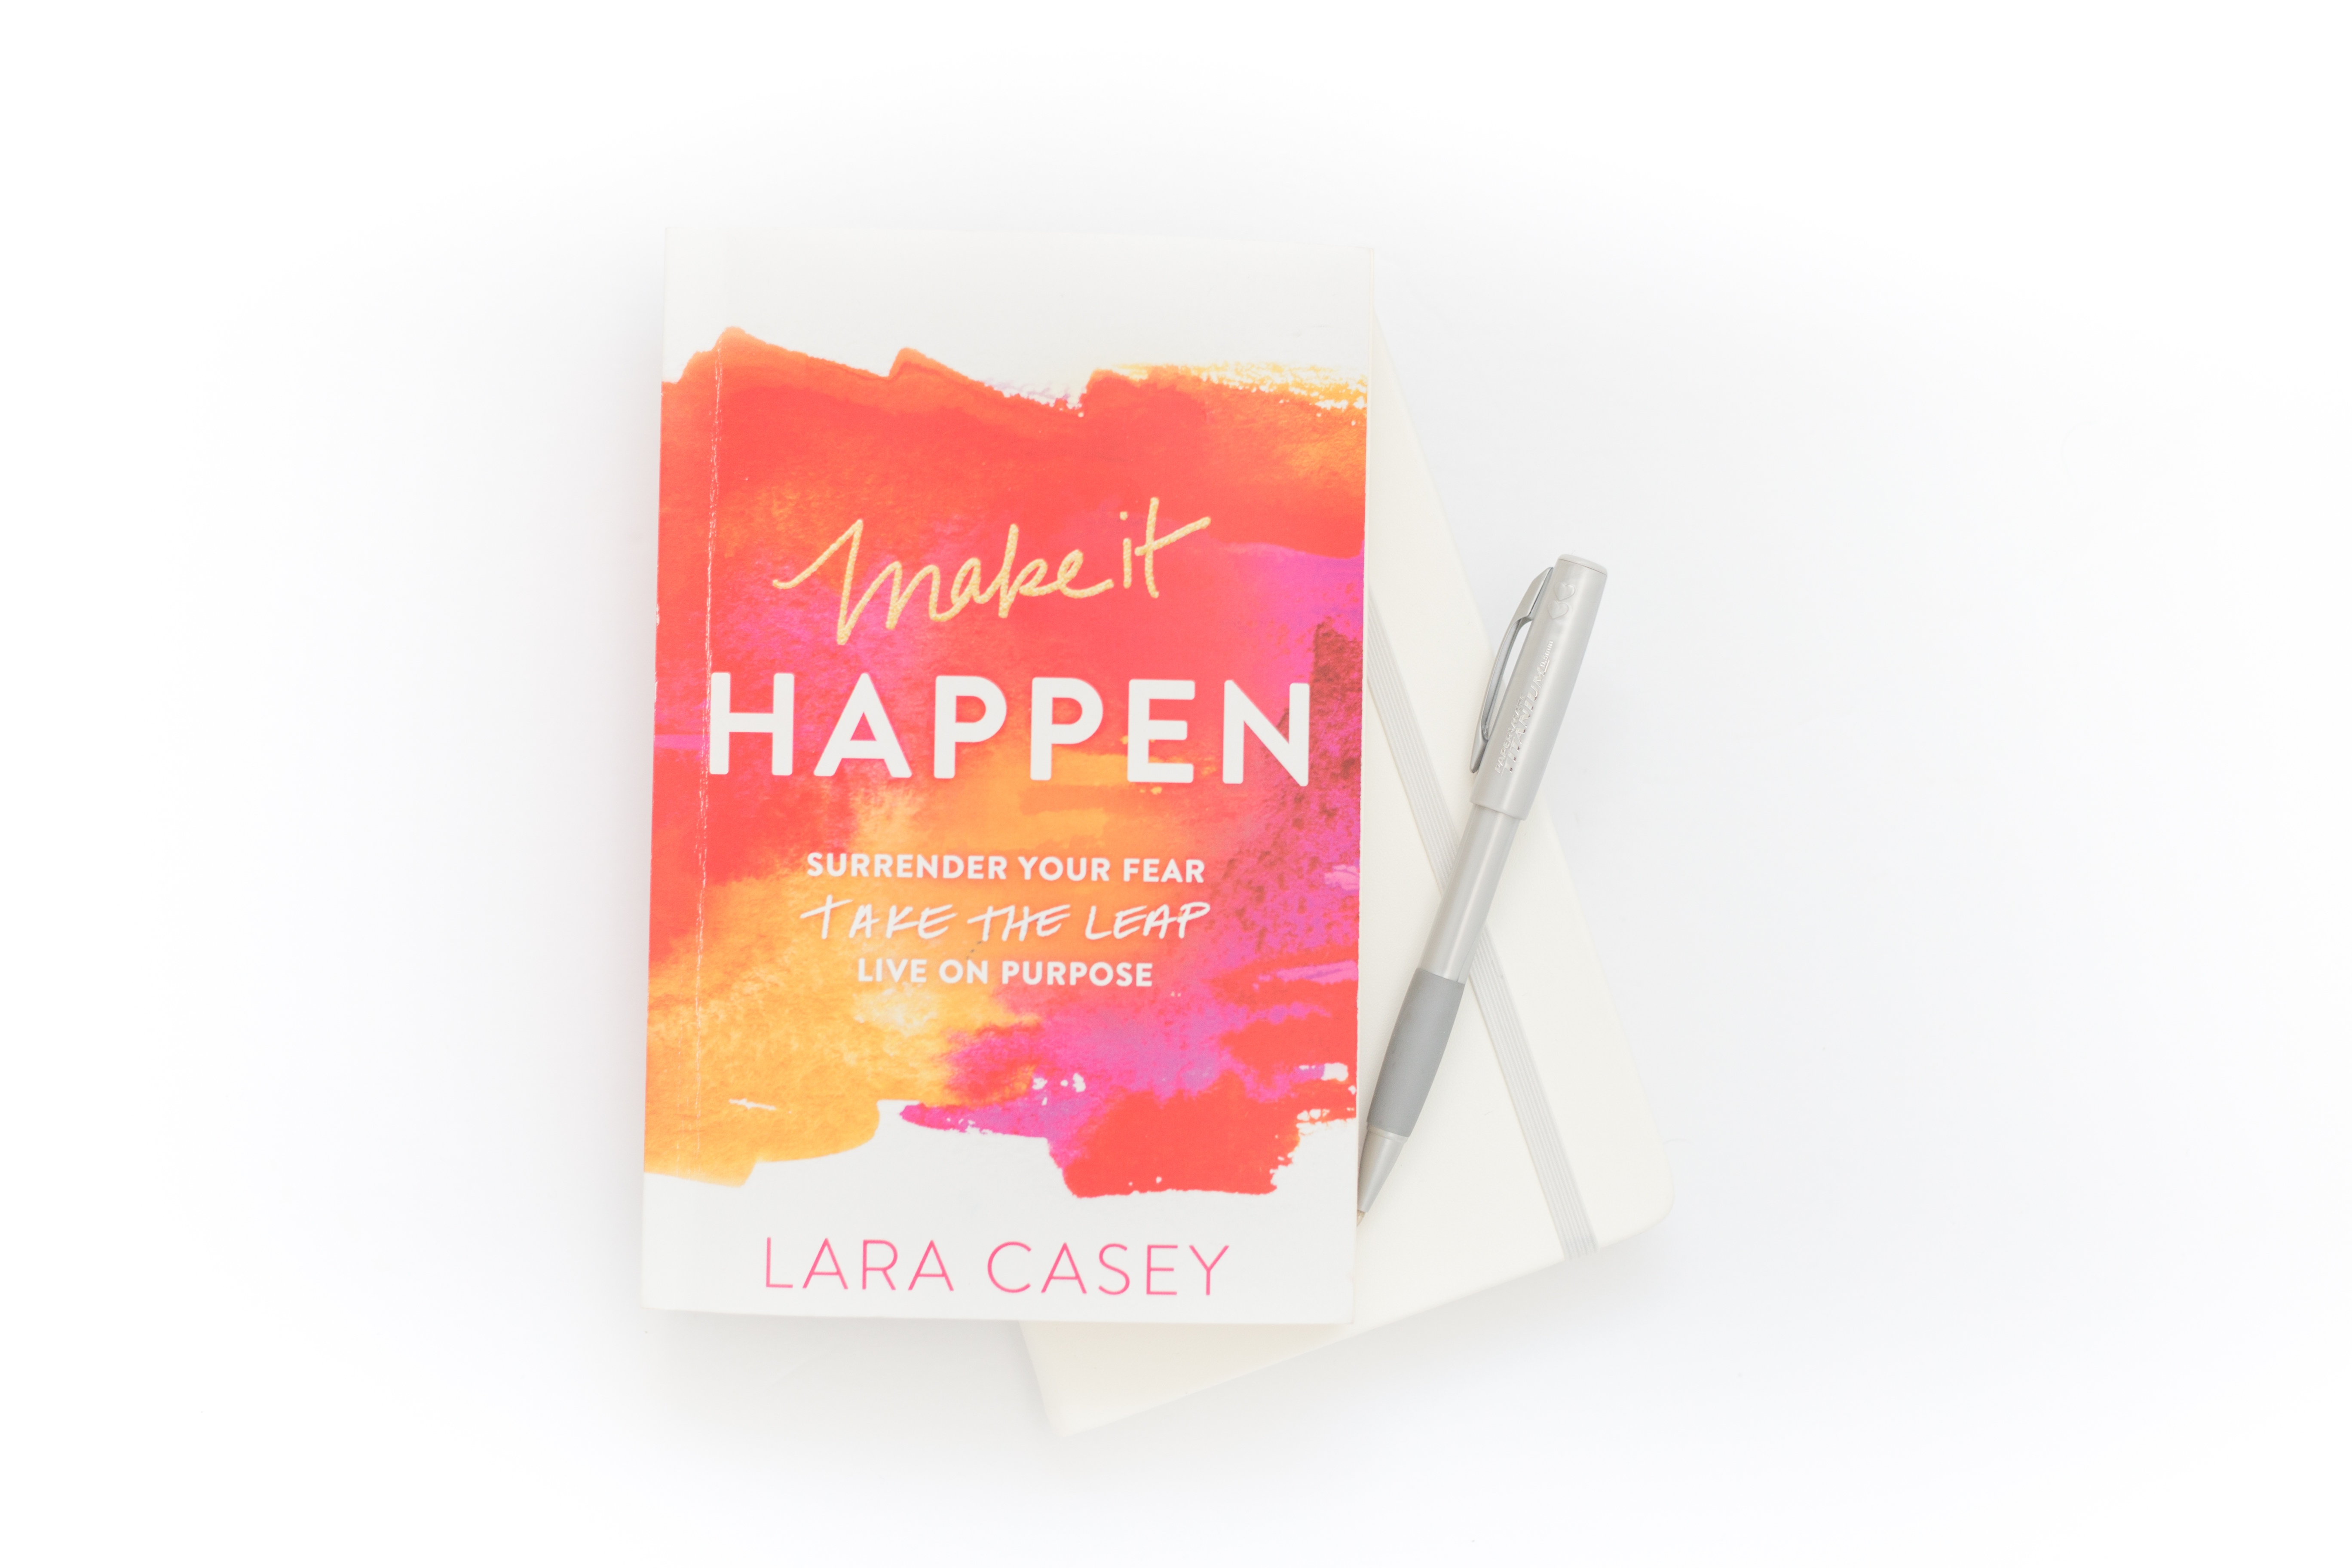 Make it Happen book by Lara Casey 2018 goals